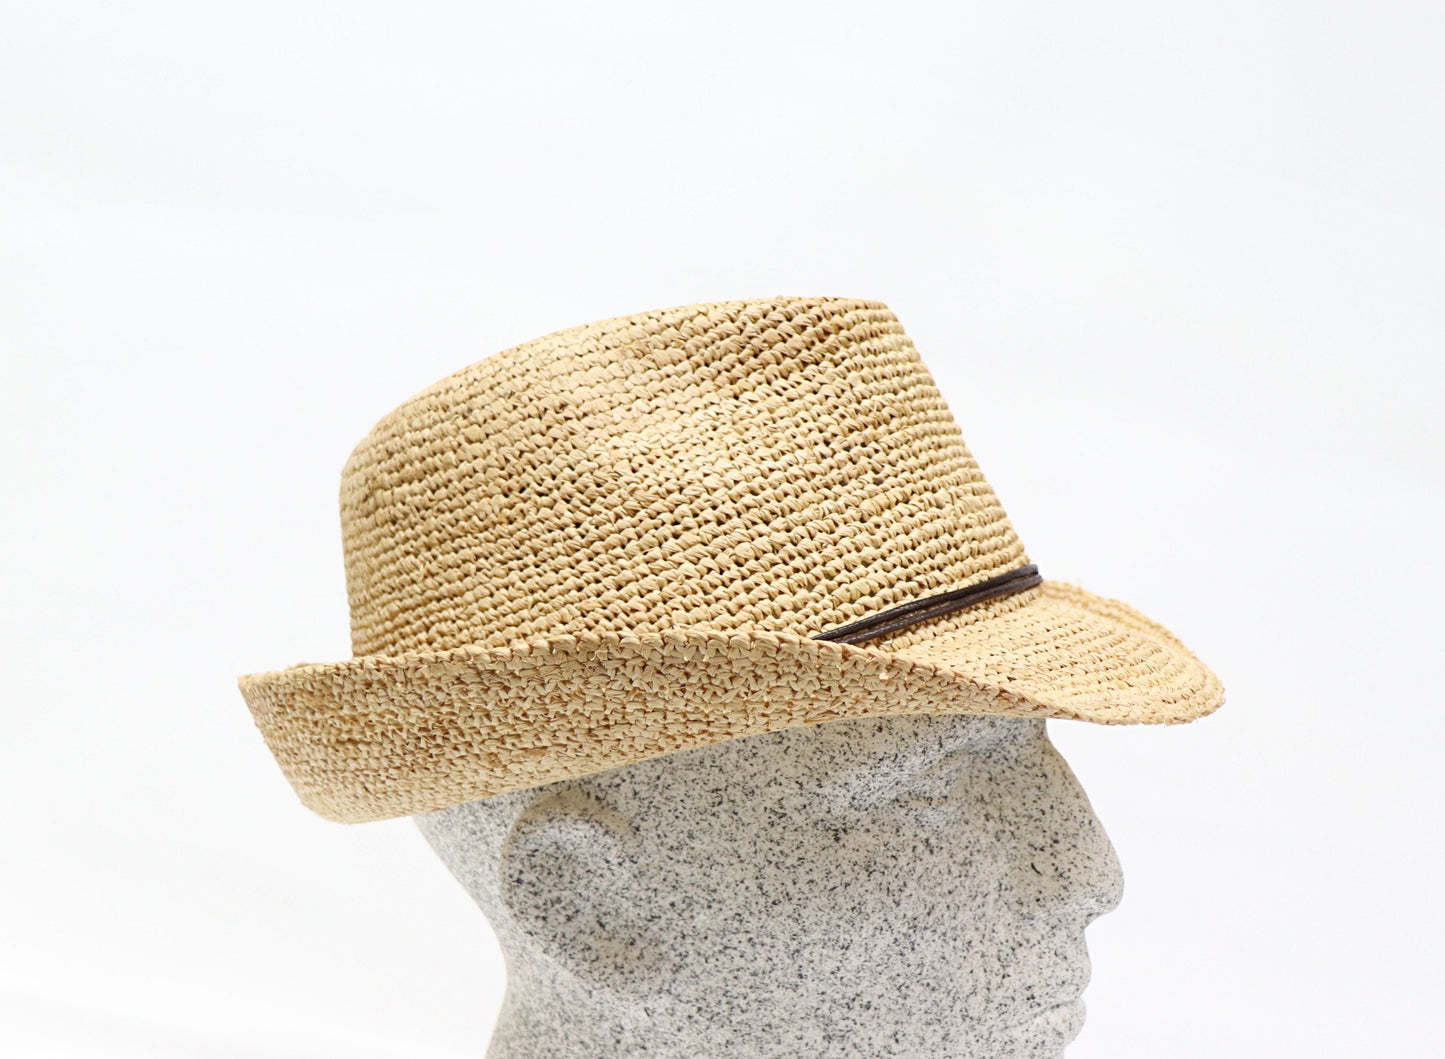 Men's straw hat - trilby